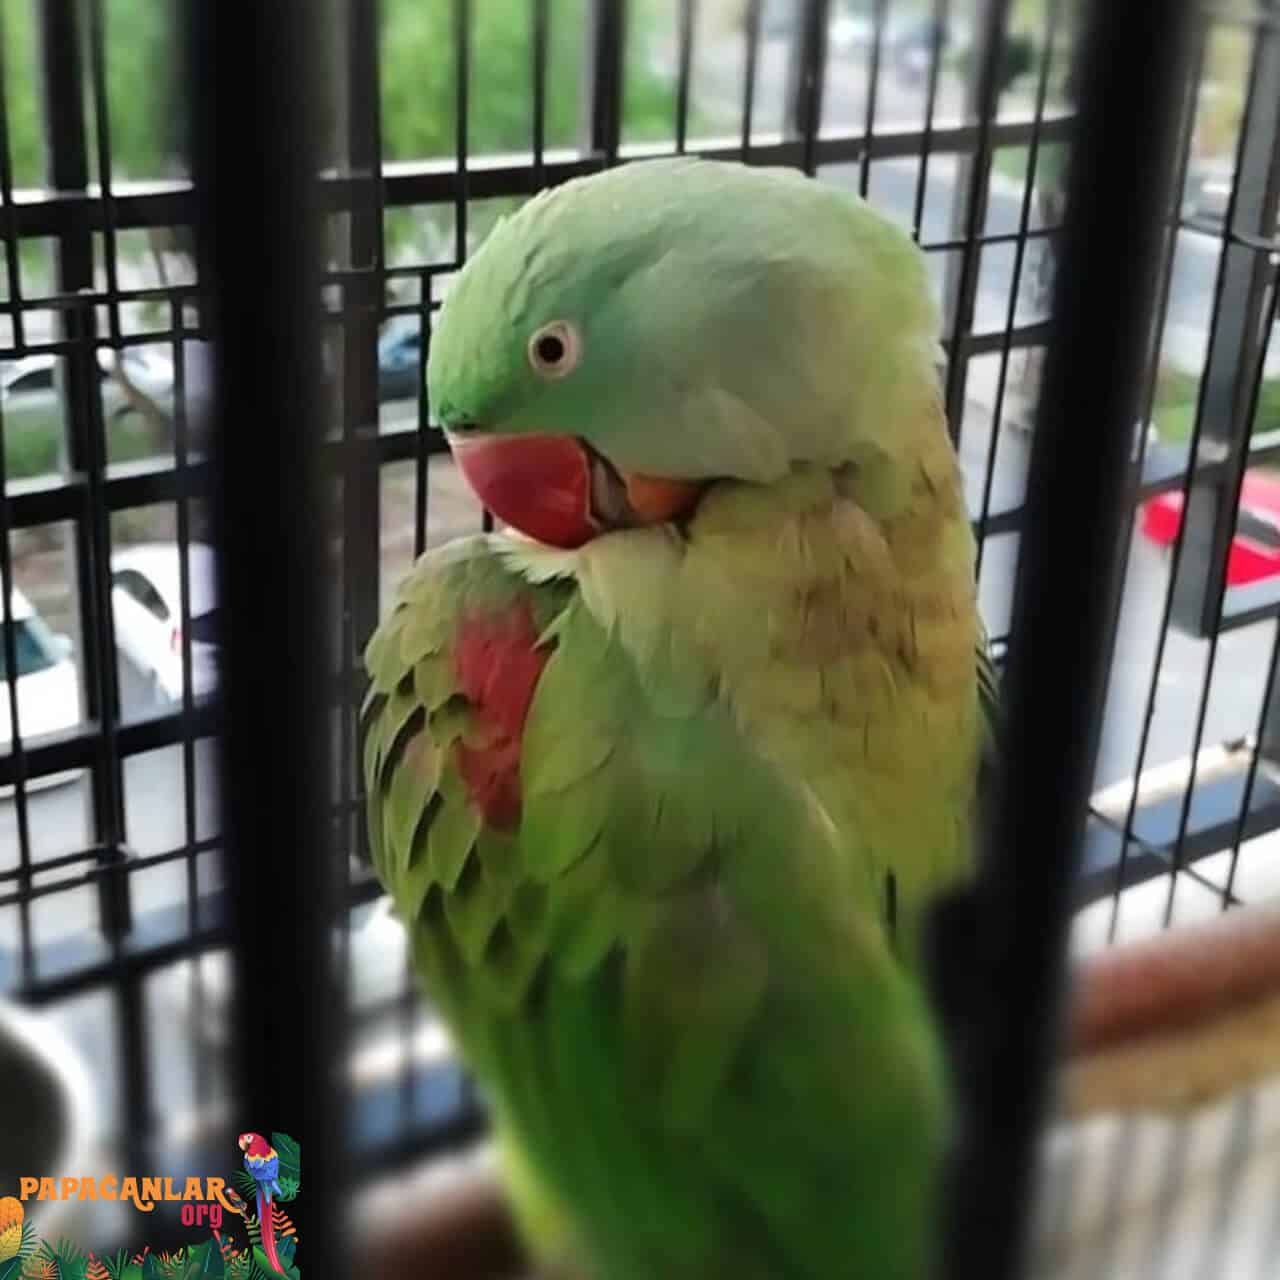 How long does an Alexander parrot live?